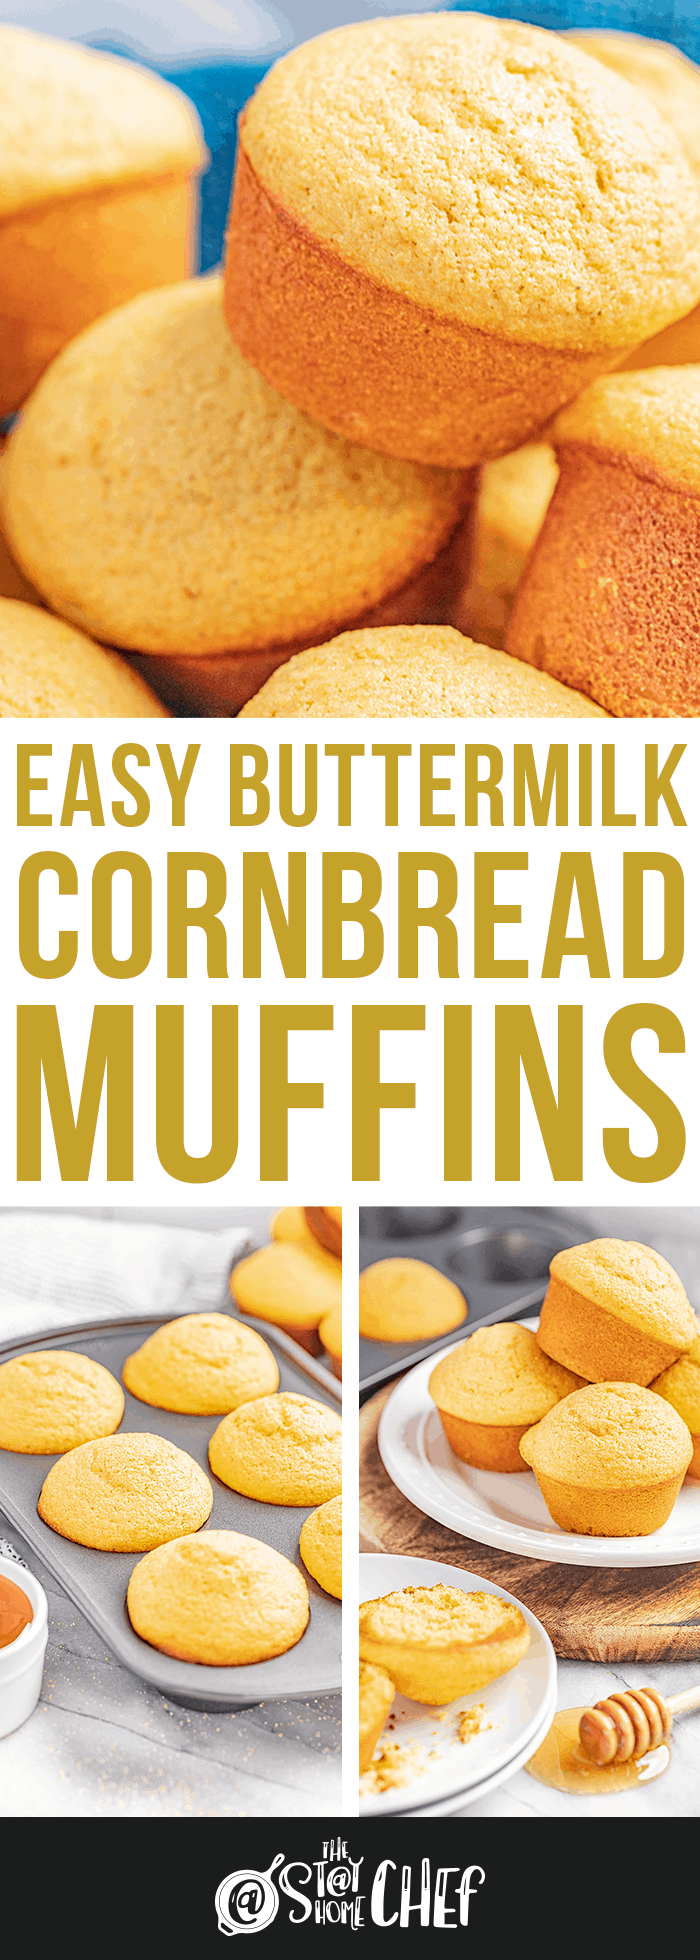 Easy Buttermilk Cornbread Muffins